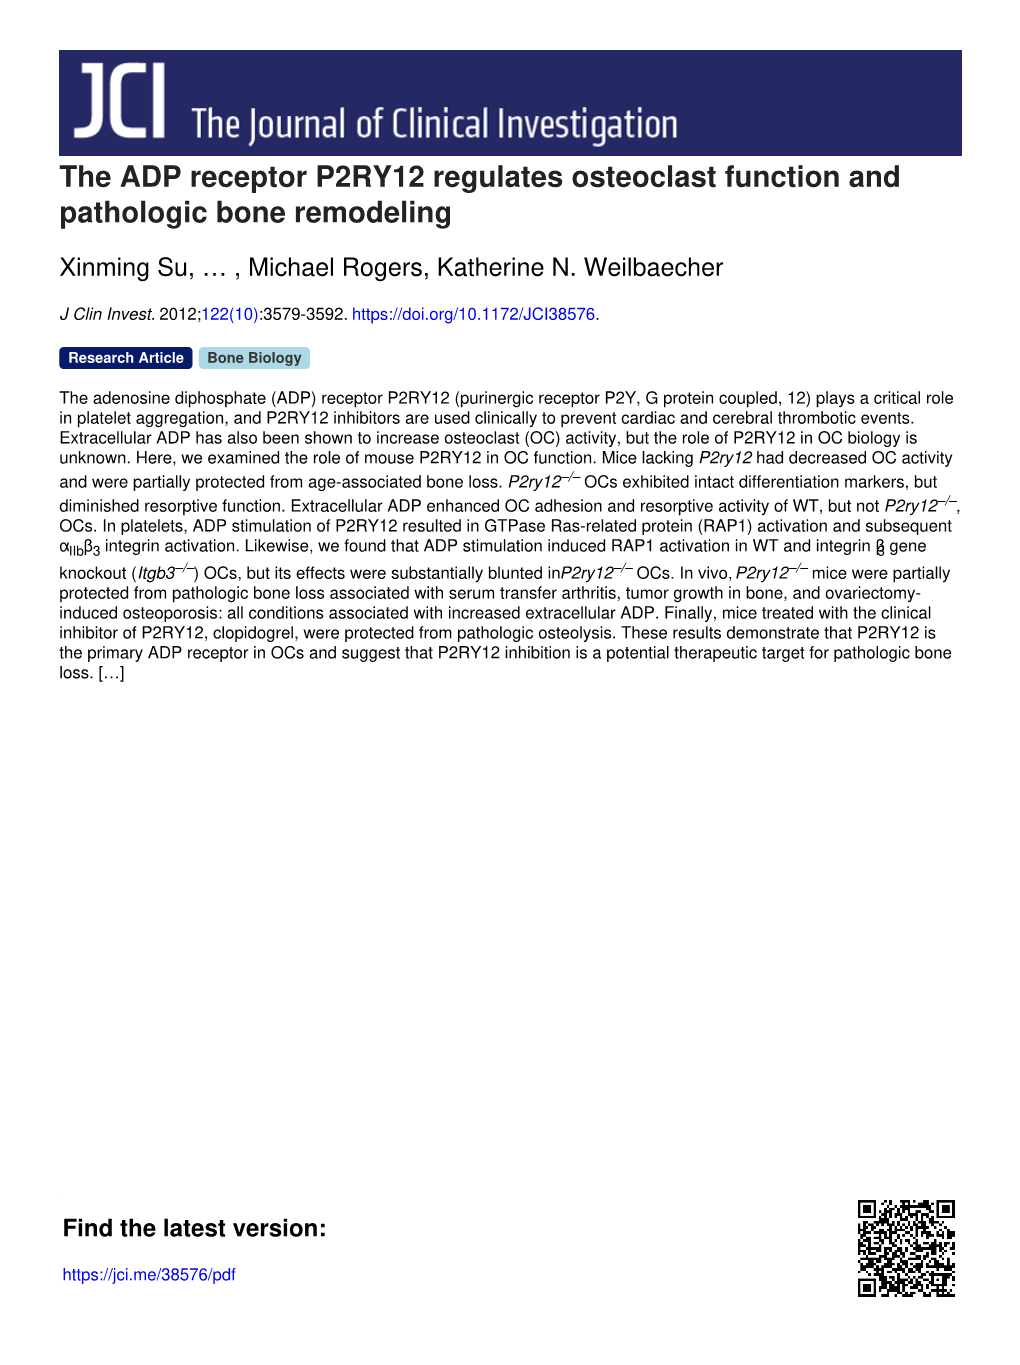 The ADP Receptor P2RY12 Regulates Osteoclast Function and Pathologic Bone Remodeling